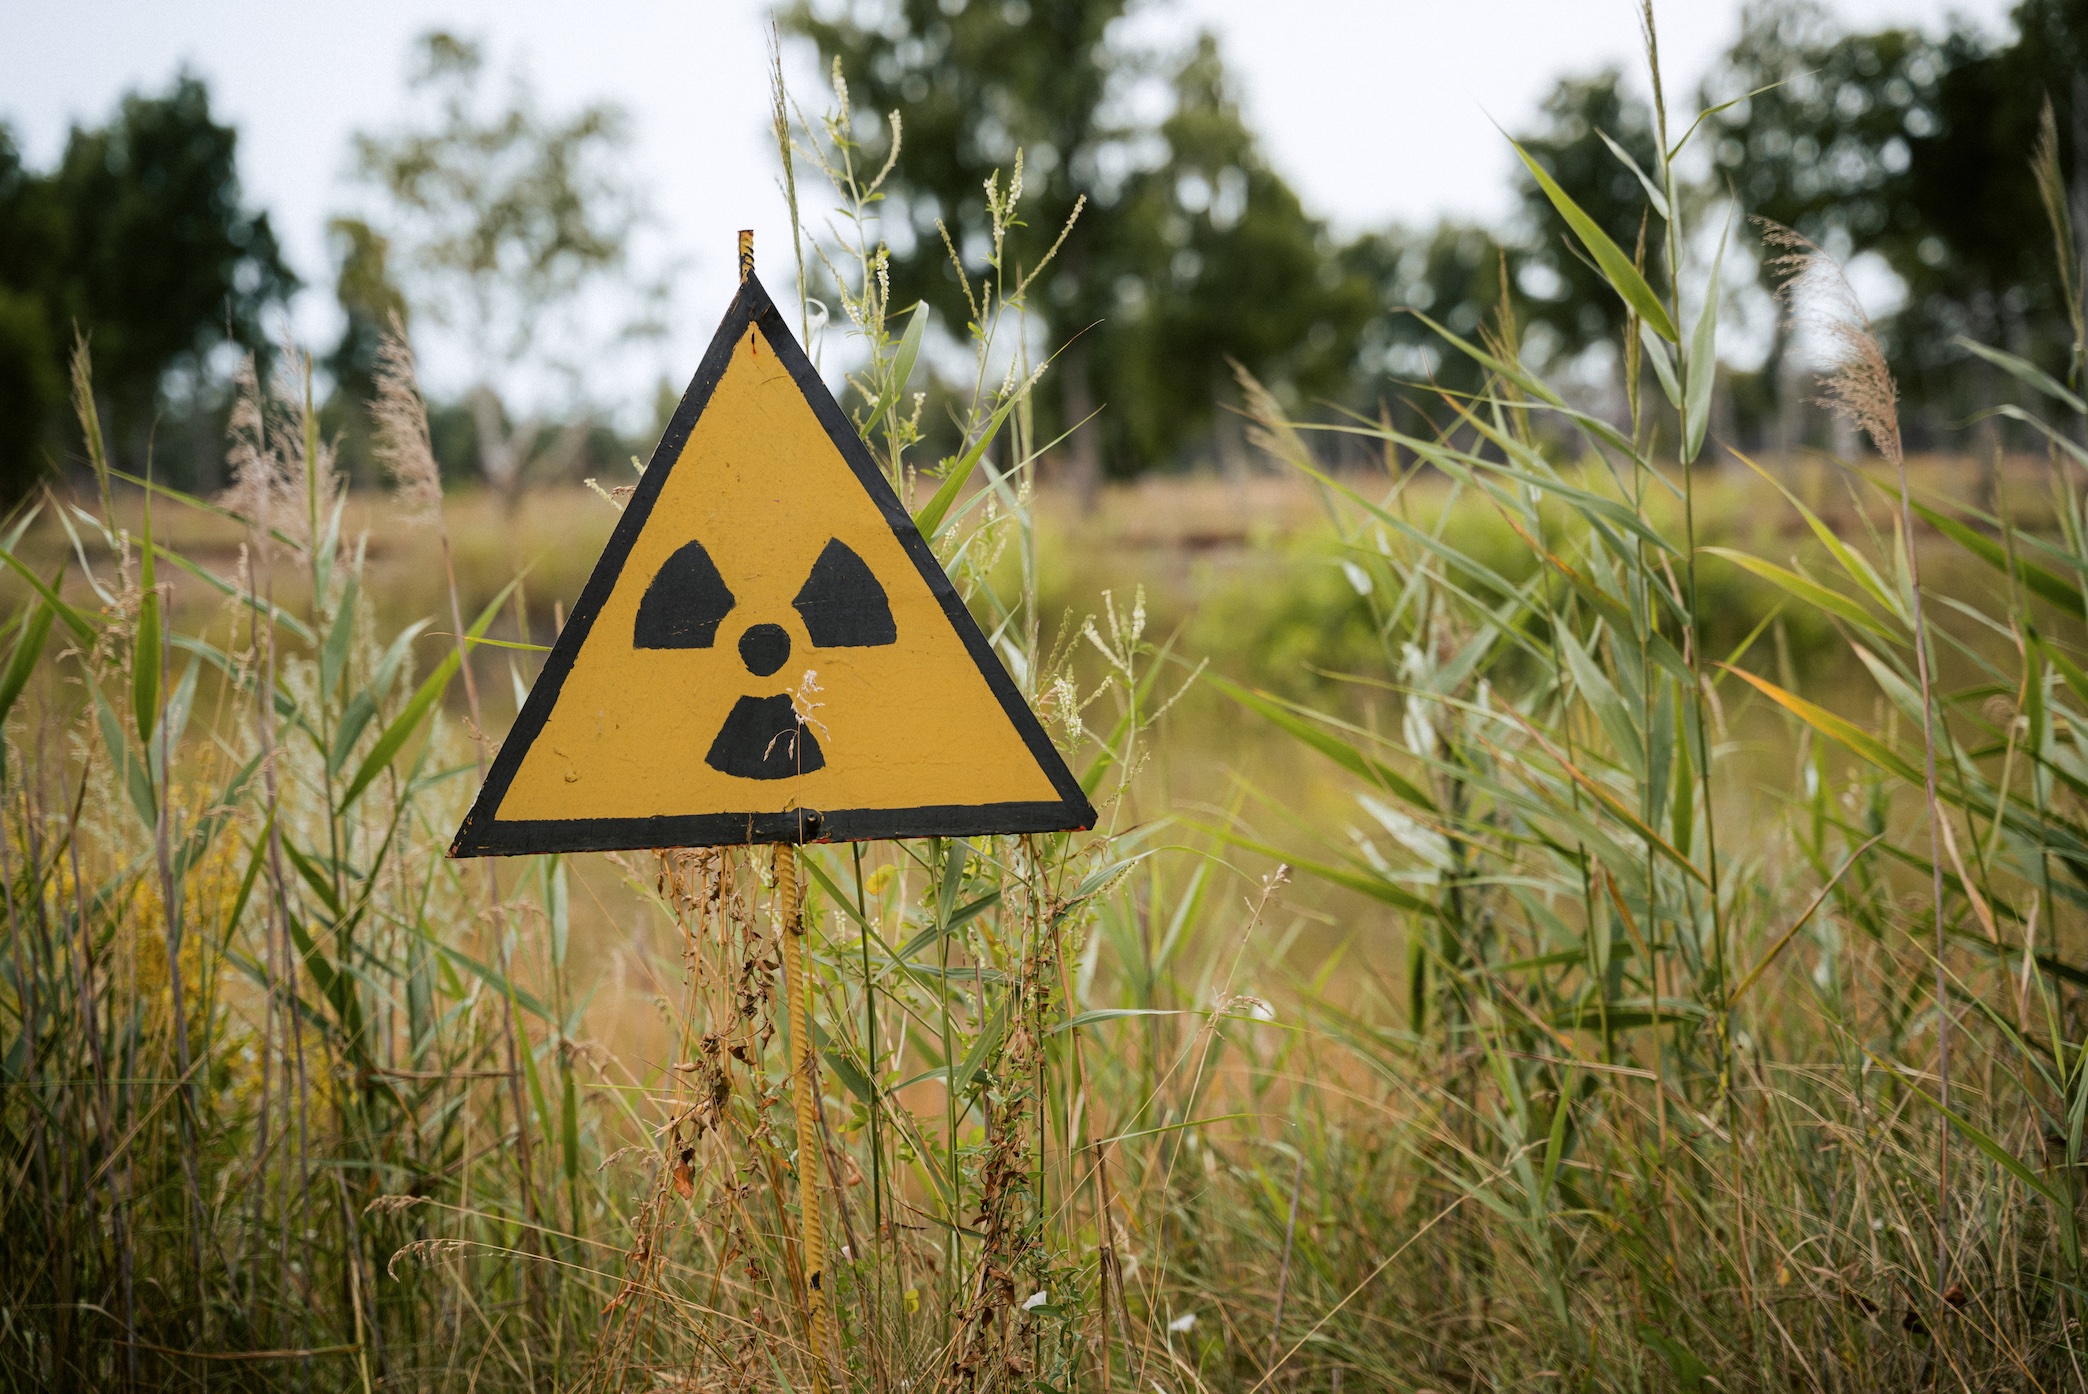 Radioactive symbol in a grassy field; image by Kilian Karger, via Unsplash.com.